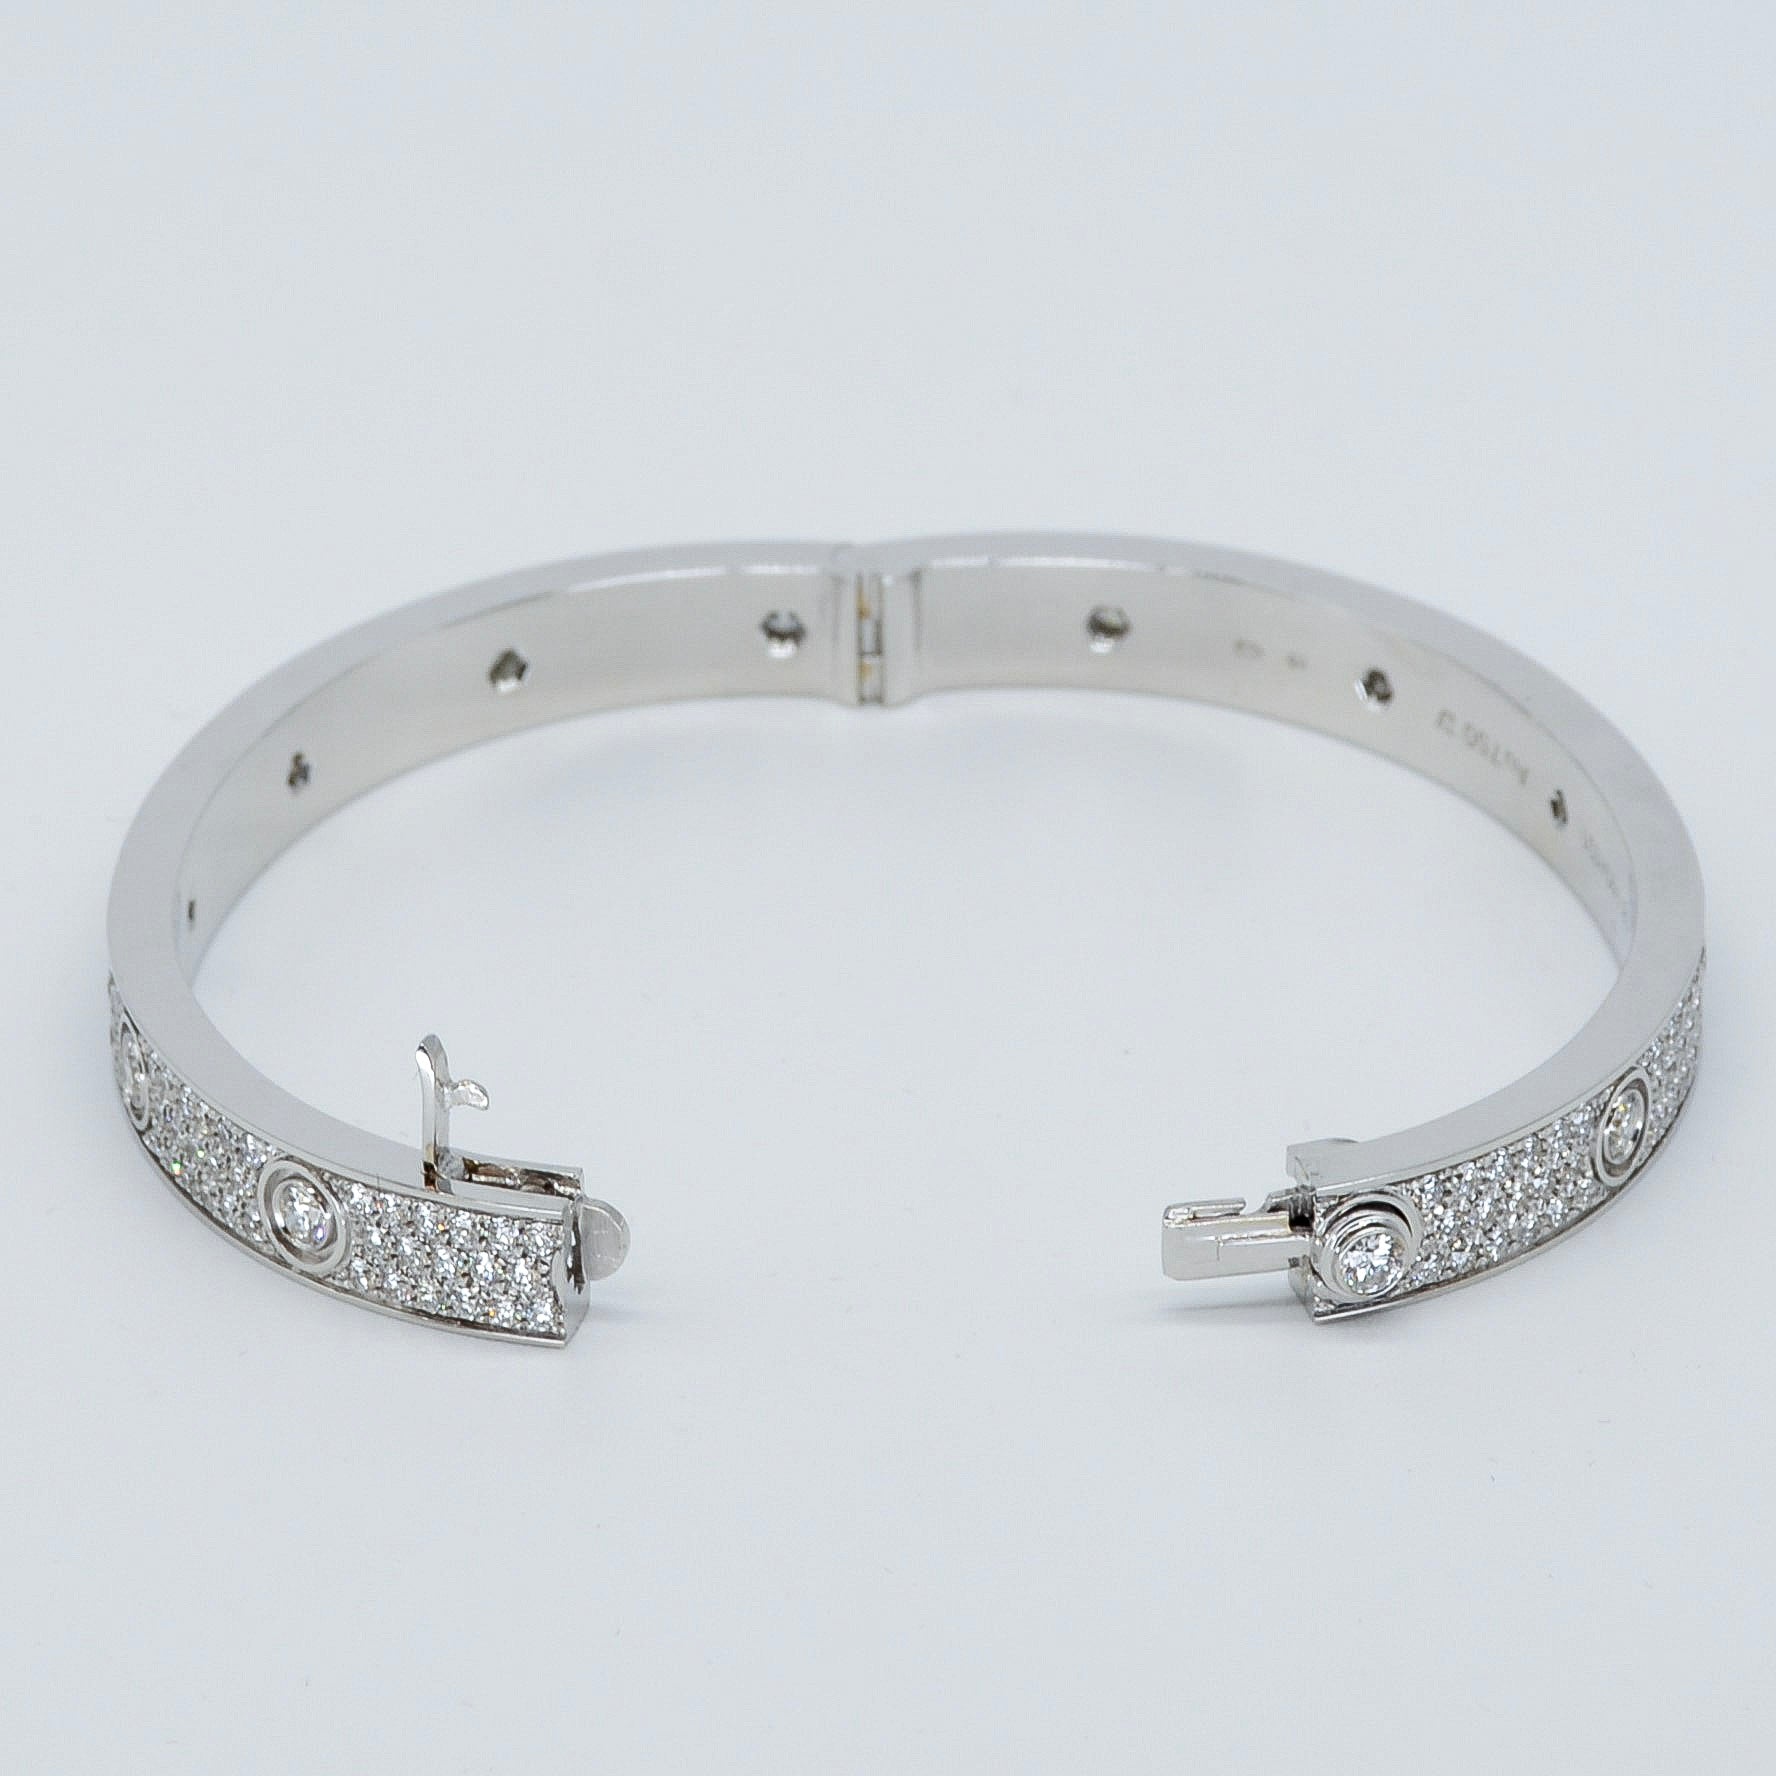 'Cartier' Love Bracelet, Diamond-Paved | 3.15ctw |